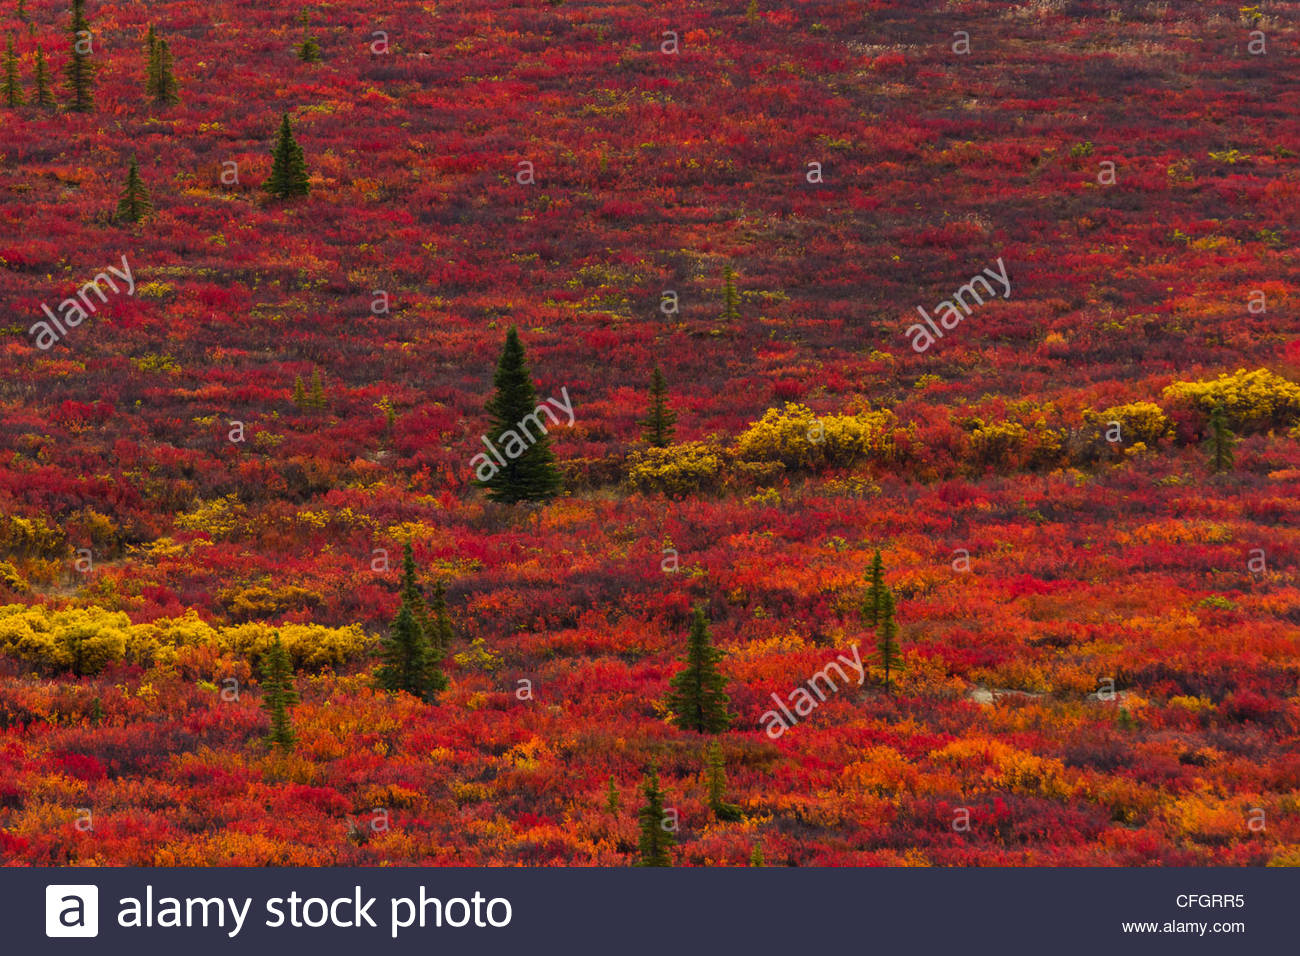 Bright red fall foliage on the Alaskan tundra. Stock Photo